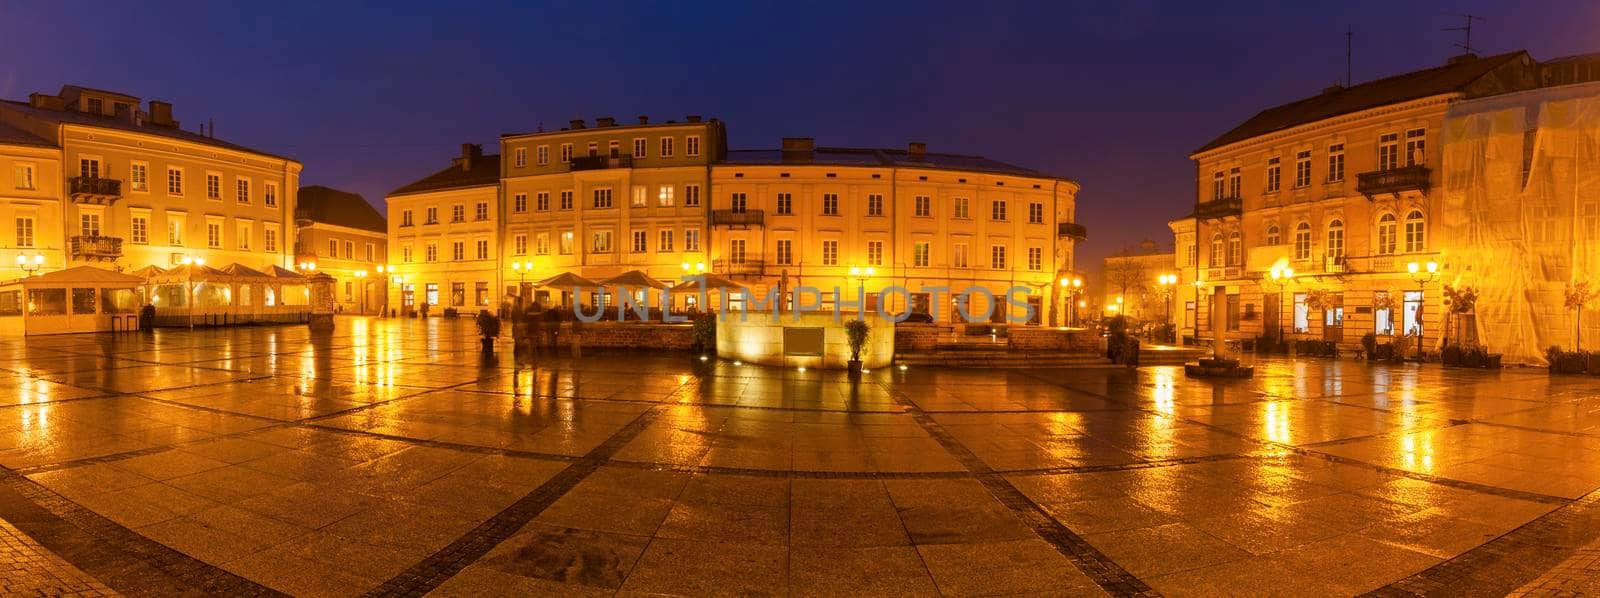 Rain on Market Square in Piotrkow Trybunalski by benkrut